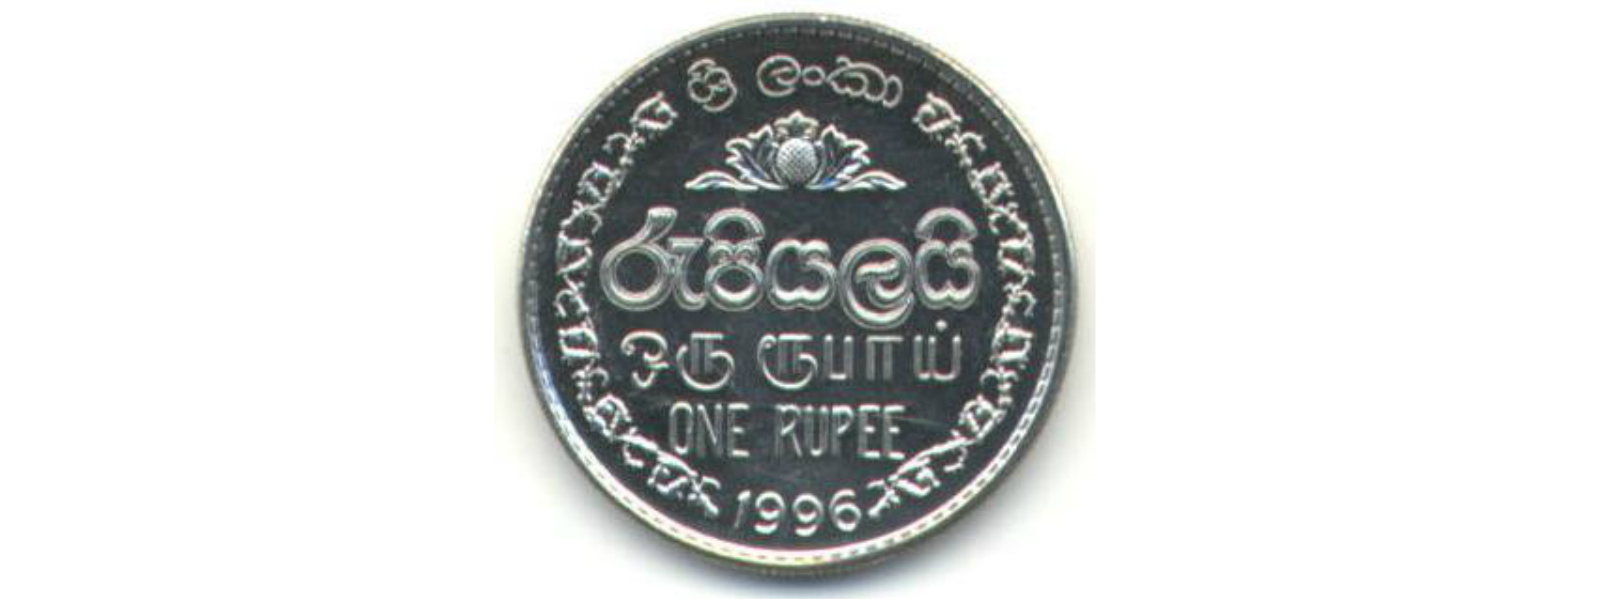 Sri Lankan rupee depreciates to 177.32 